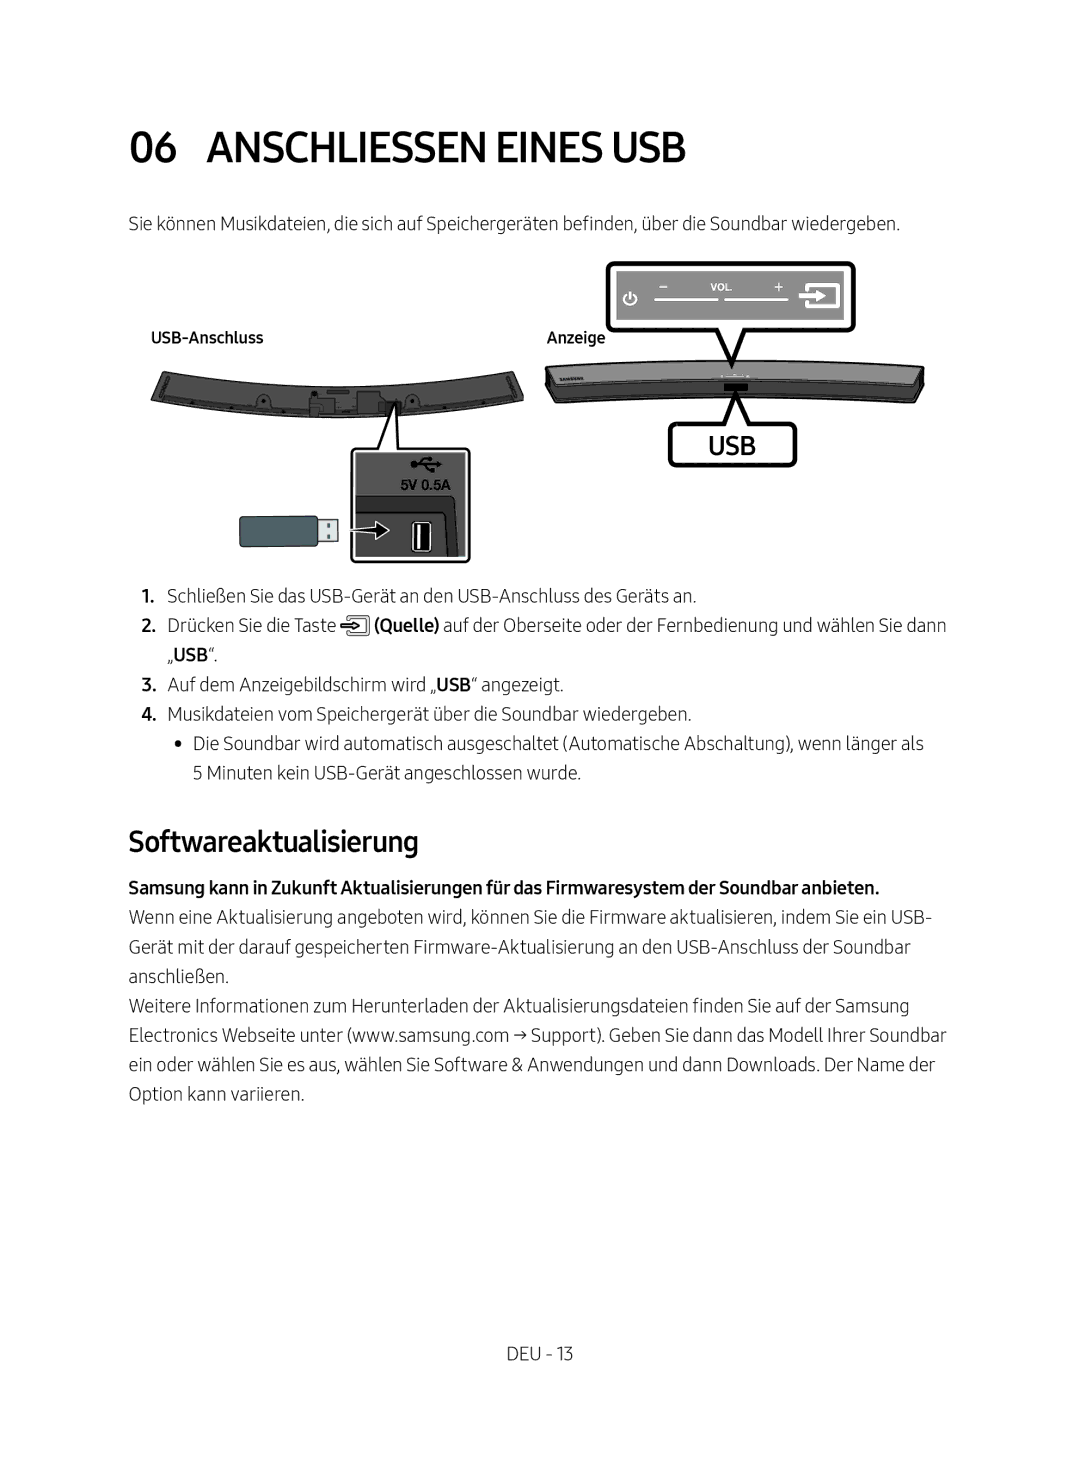 Samsung HW-M4500/EN manual Anschliessen eines USB, Softwareaktualisierung, USB-Anschluss 